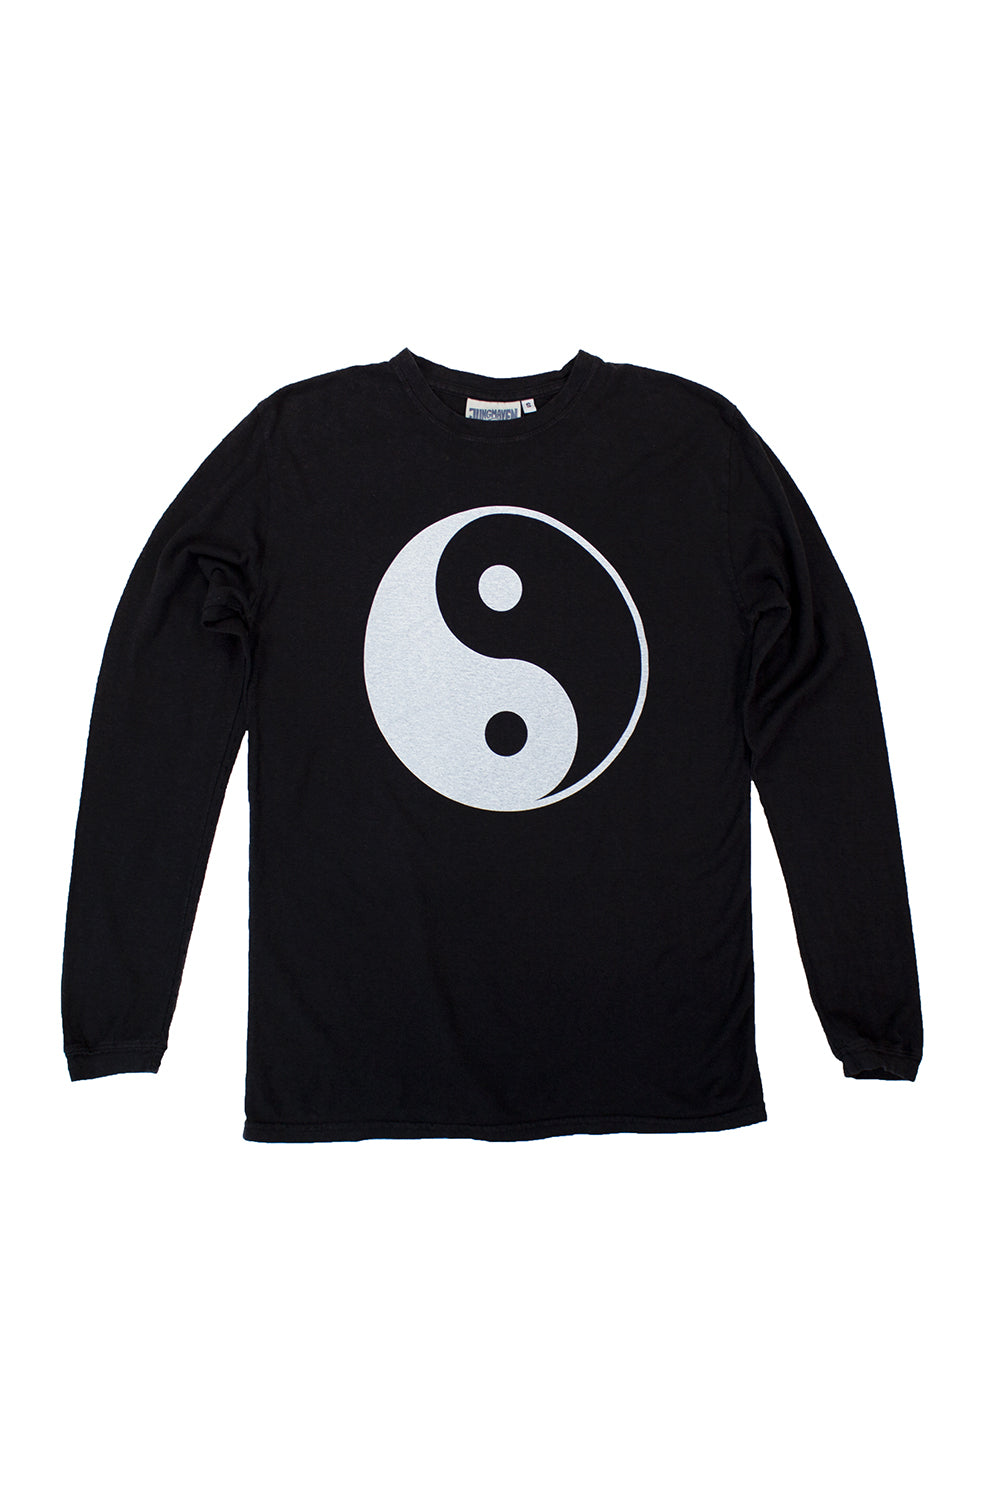 Yin Yang Jung Long Sleeve Tee | Jungmaven Hemp Clothing & Accessories / Color: Black